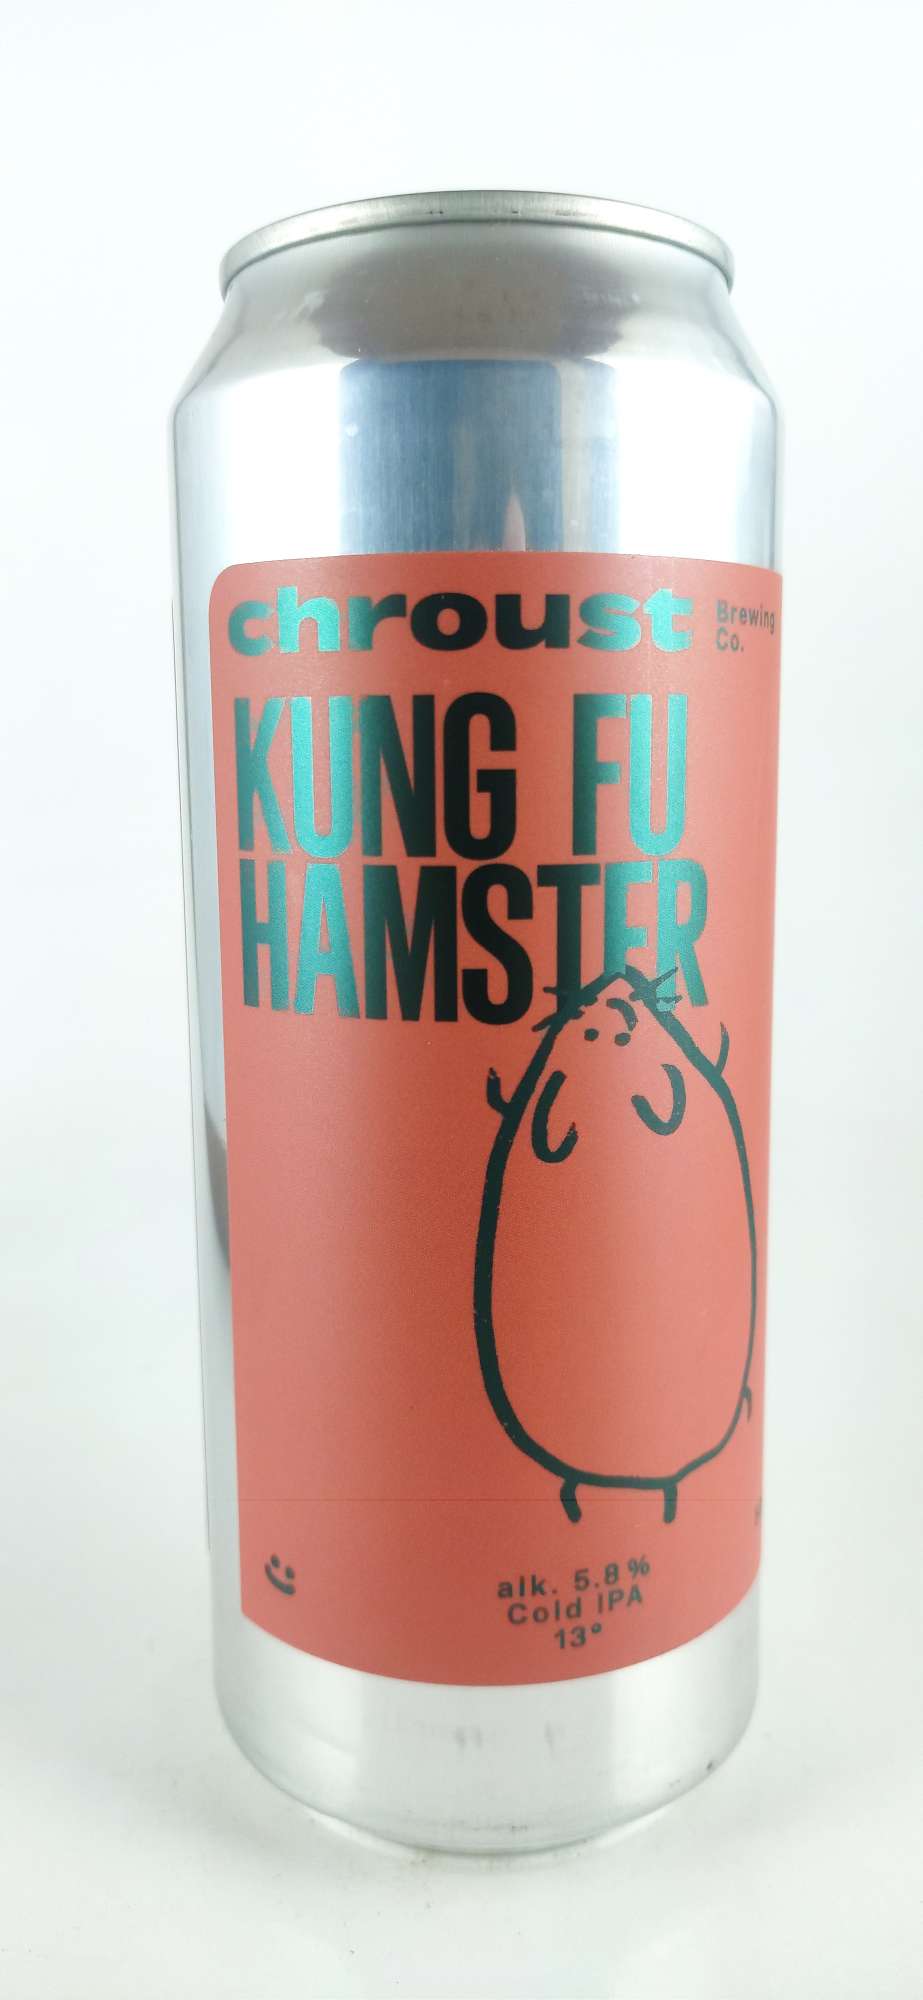 Chroust Kung Fu Hamster Cold IPA 13°